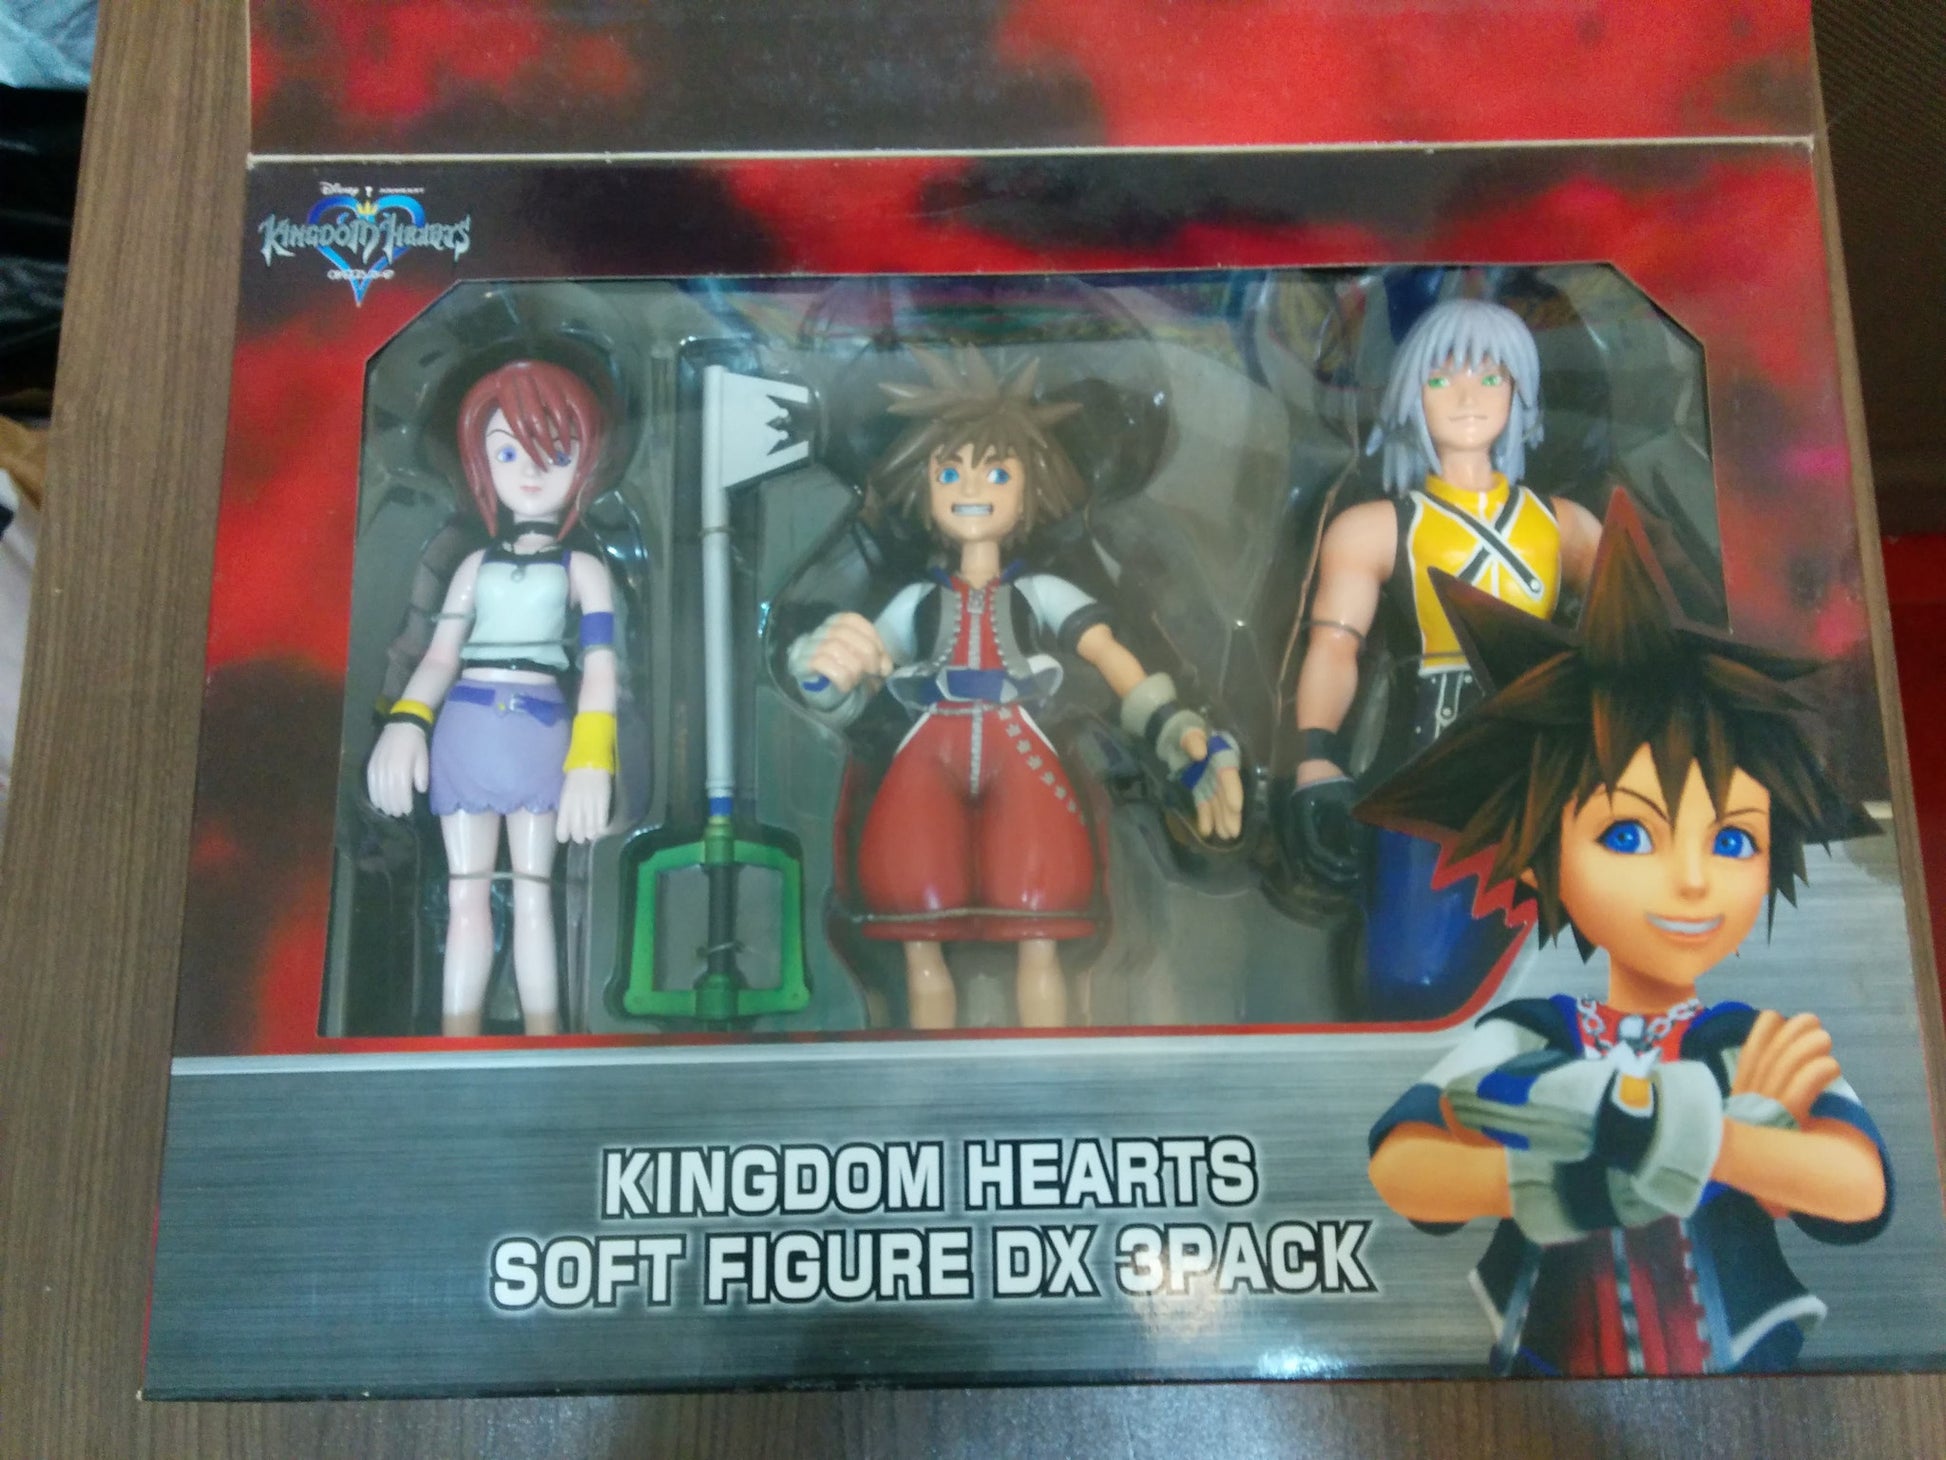 Tomy Disney Square Kingdom Hearts Soft Figure DX 3 Pack Box Set - Lavits Figure
 - 2